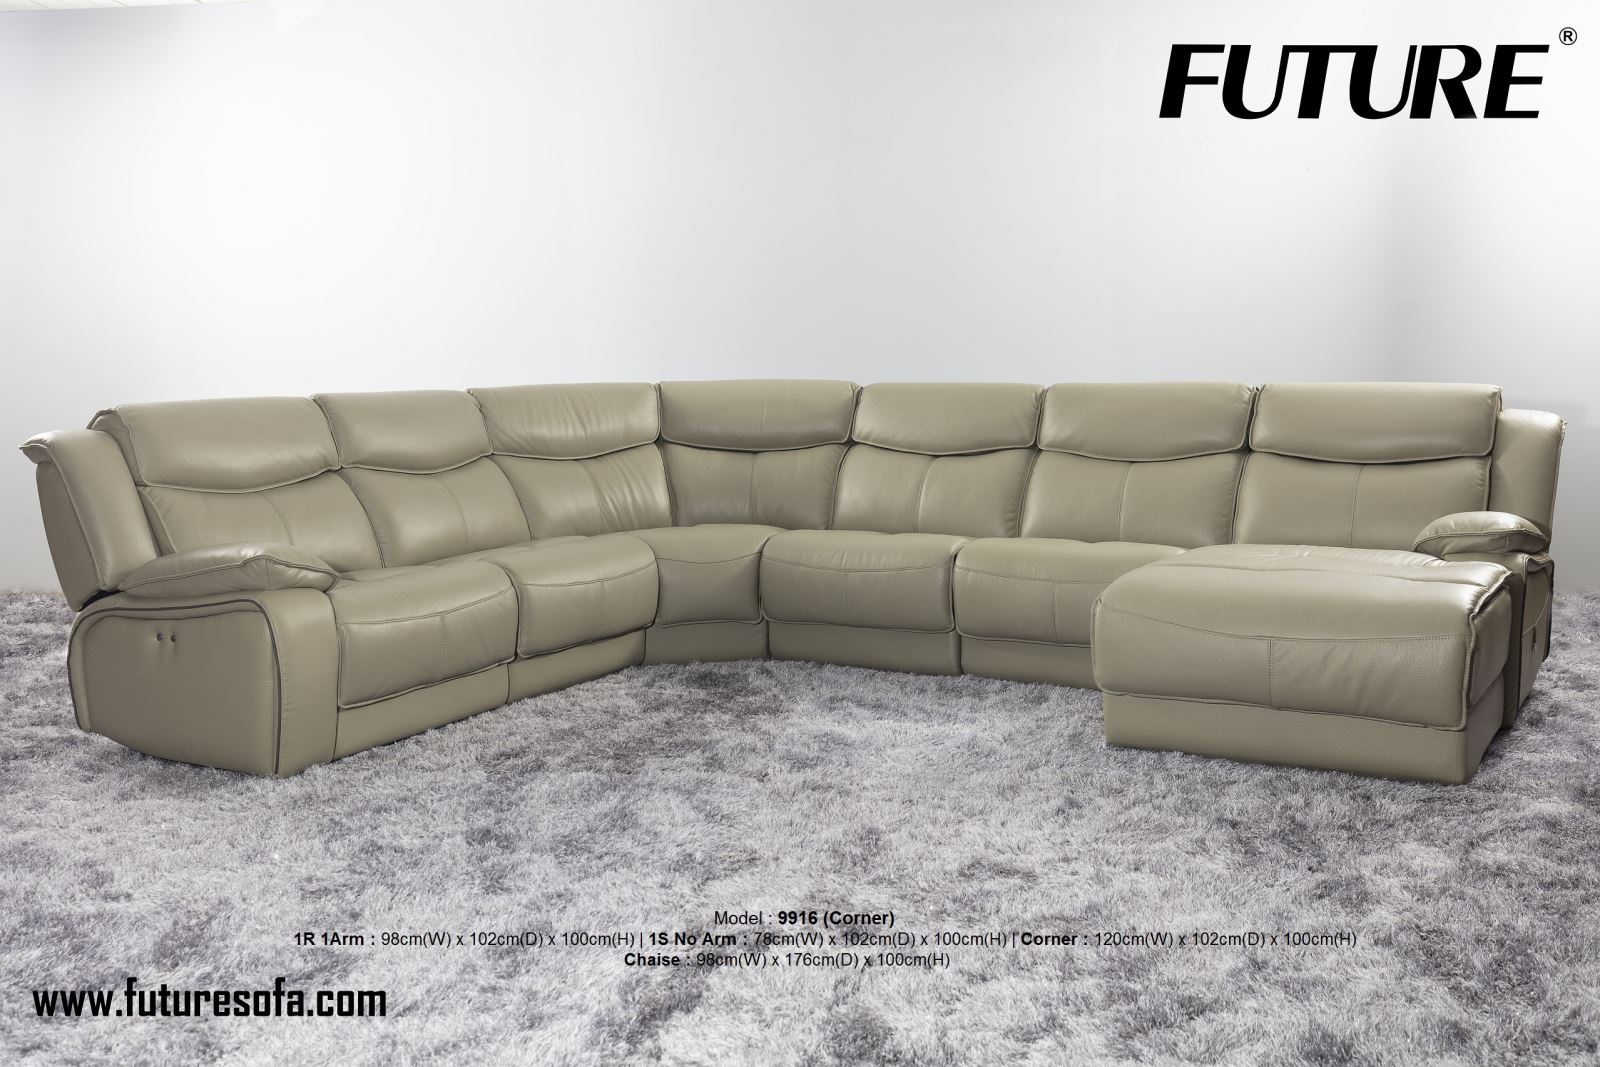 Sofa góc Future Model 9916 siêu khuyến mại 40% saigonsofa.com